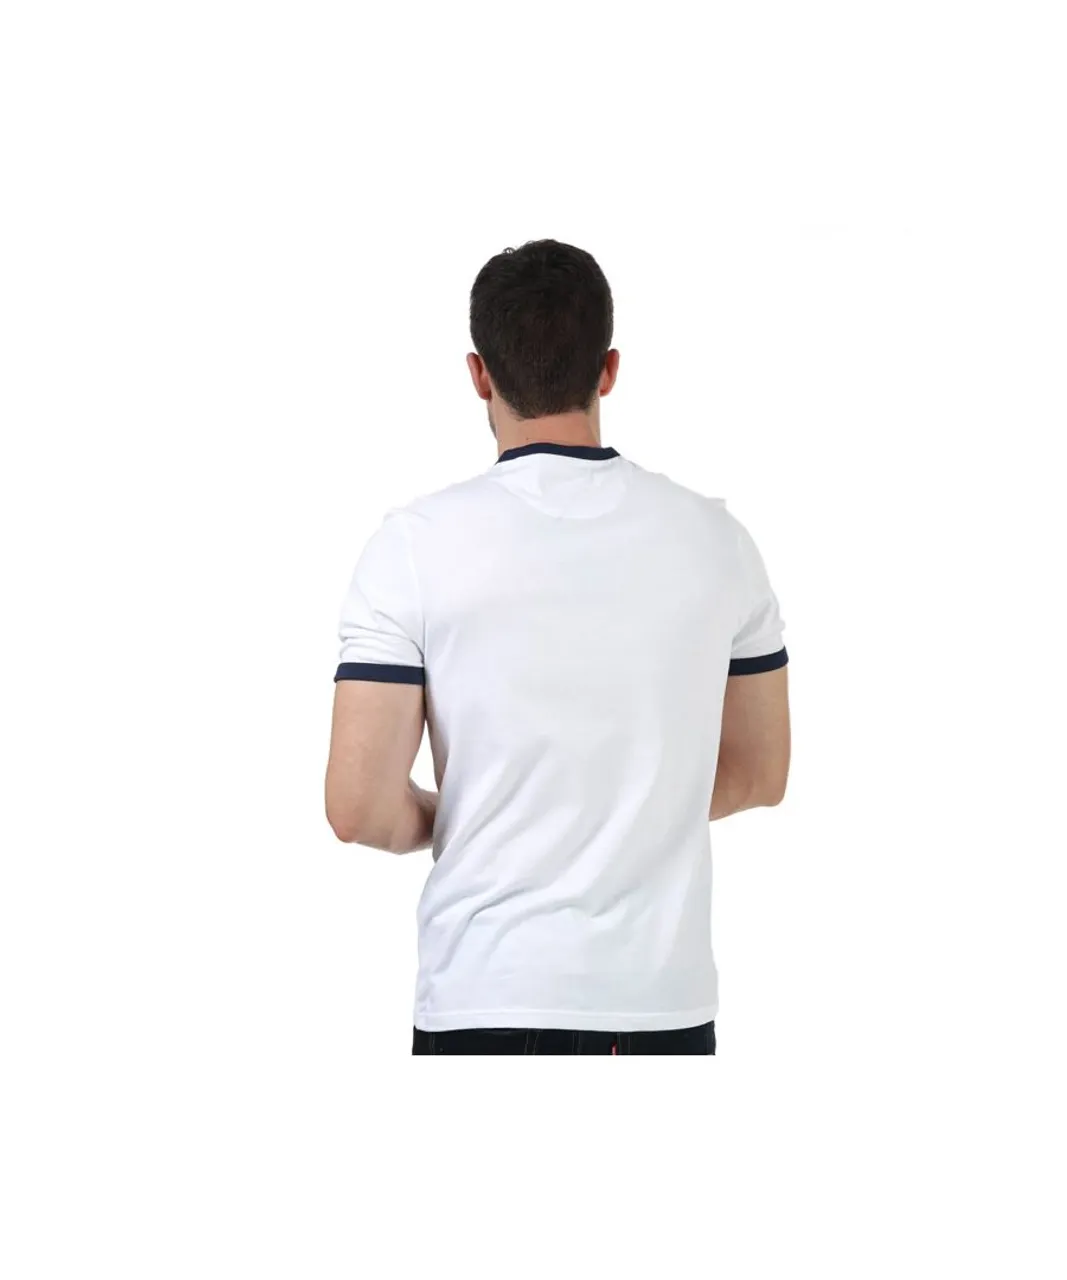 Lyle & Scott Mens And Ringer T-Shirt in White Navy - Blue & White Cotton